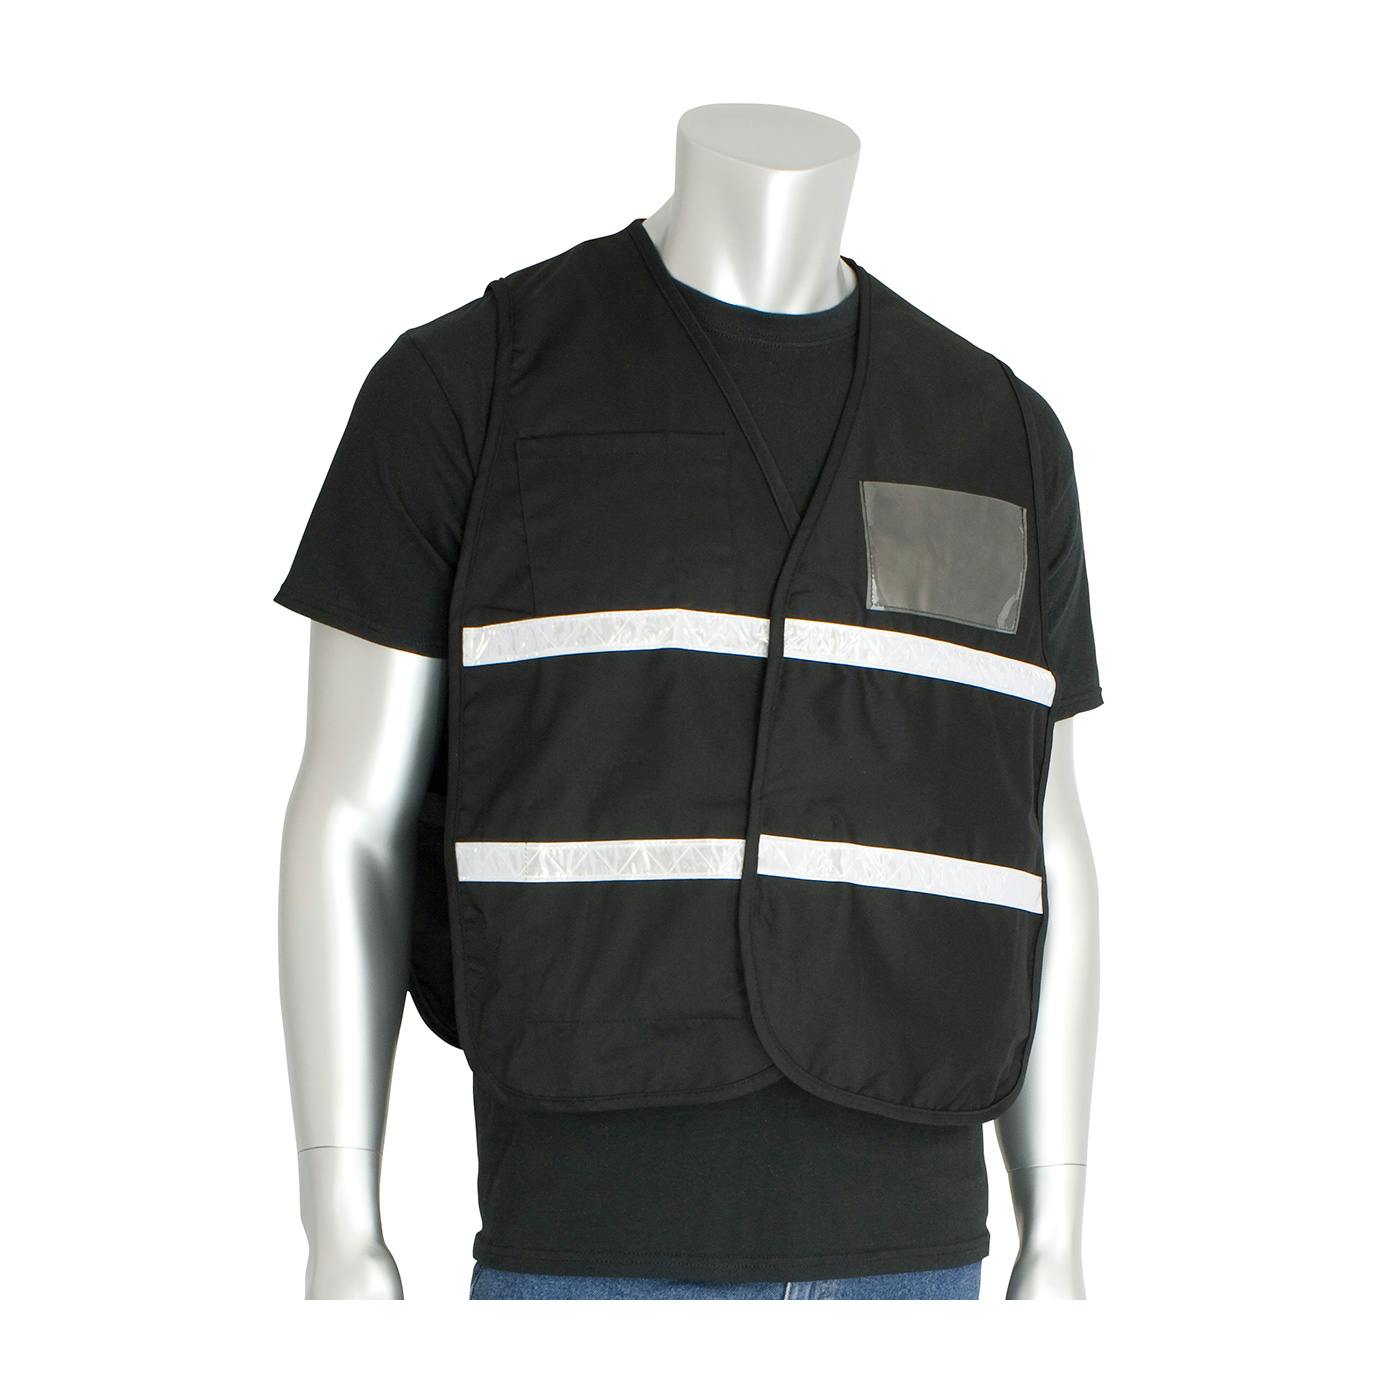 Non-ANSI Incident Command Vest - Cotton/Polyester Blend, Black (300-2502)_1